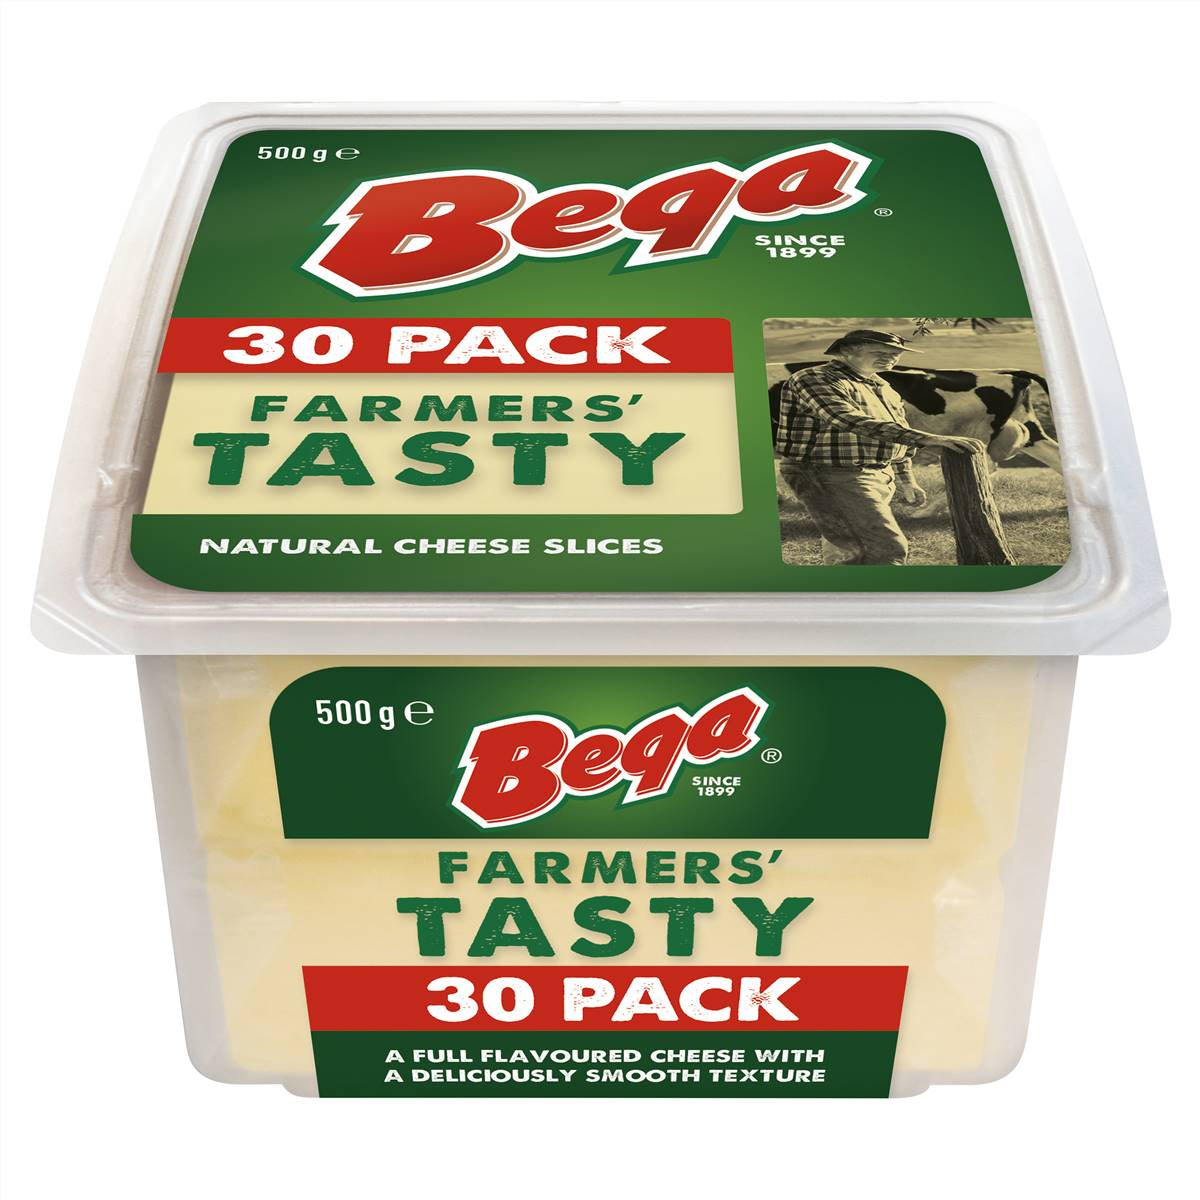 Bega Tasty Sliced Cheese 500g